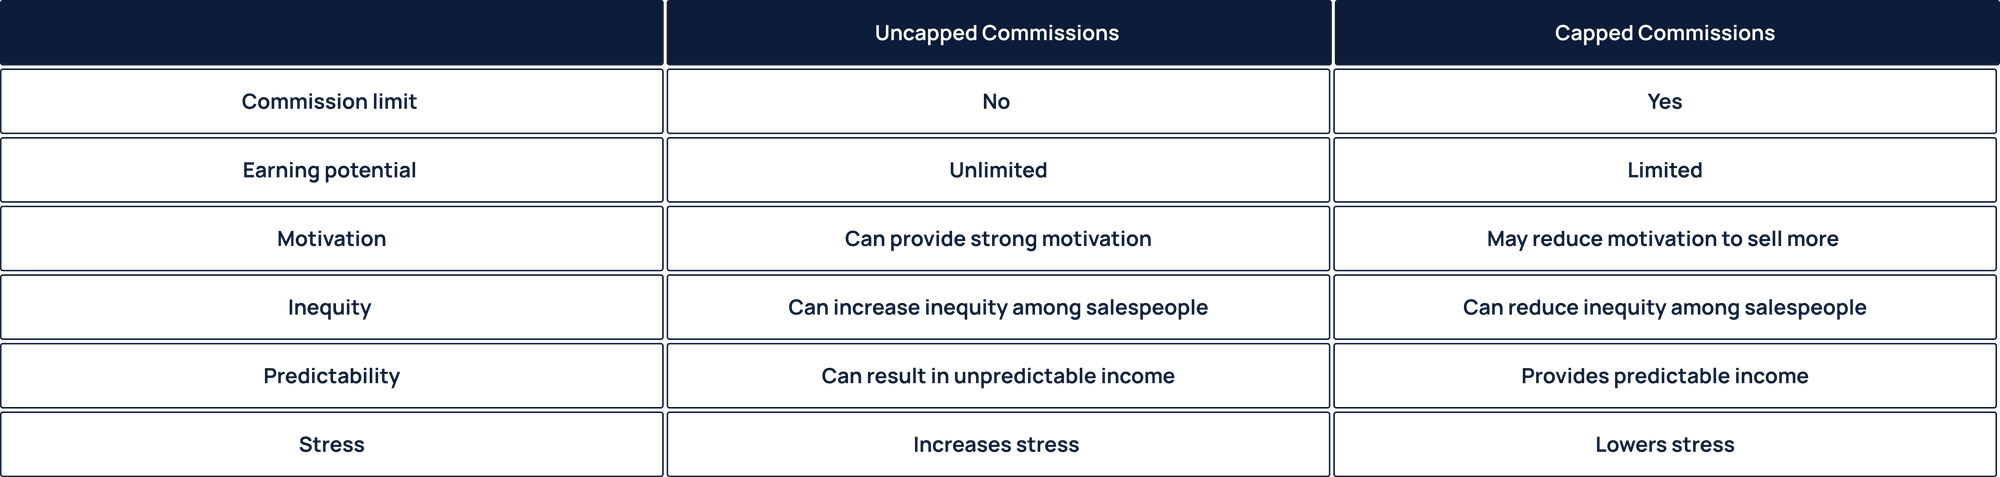 uncapped-vs-capped-commissions